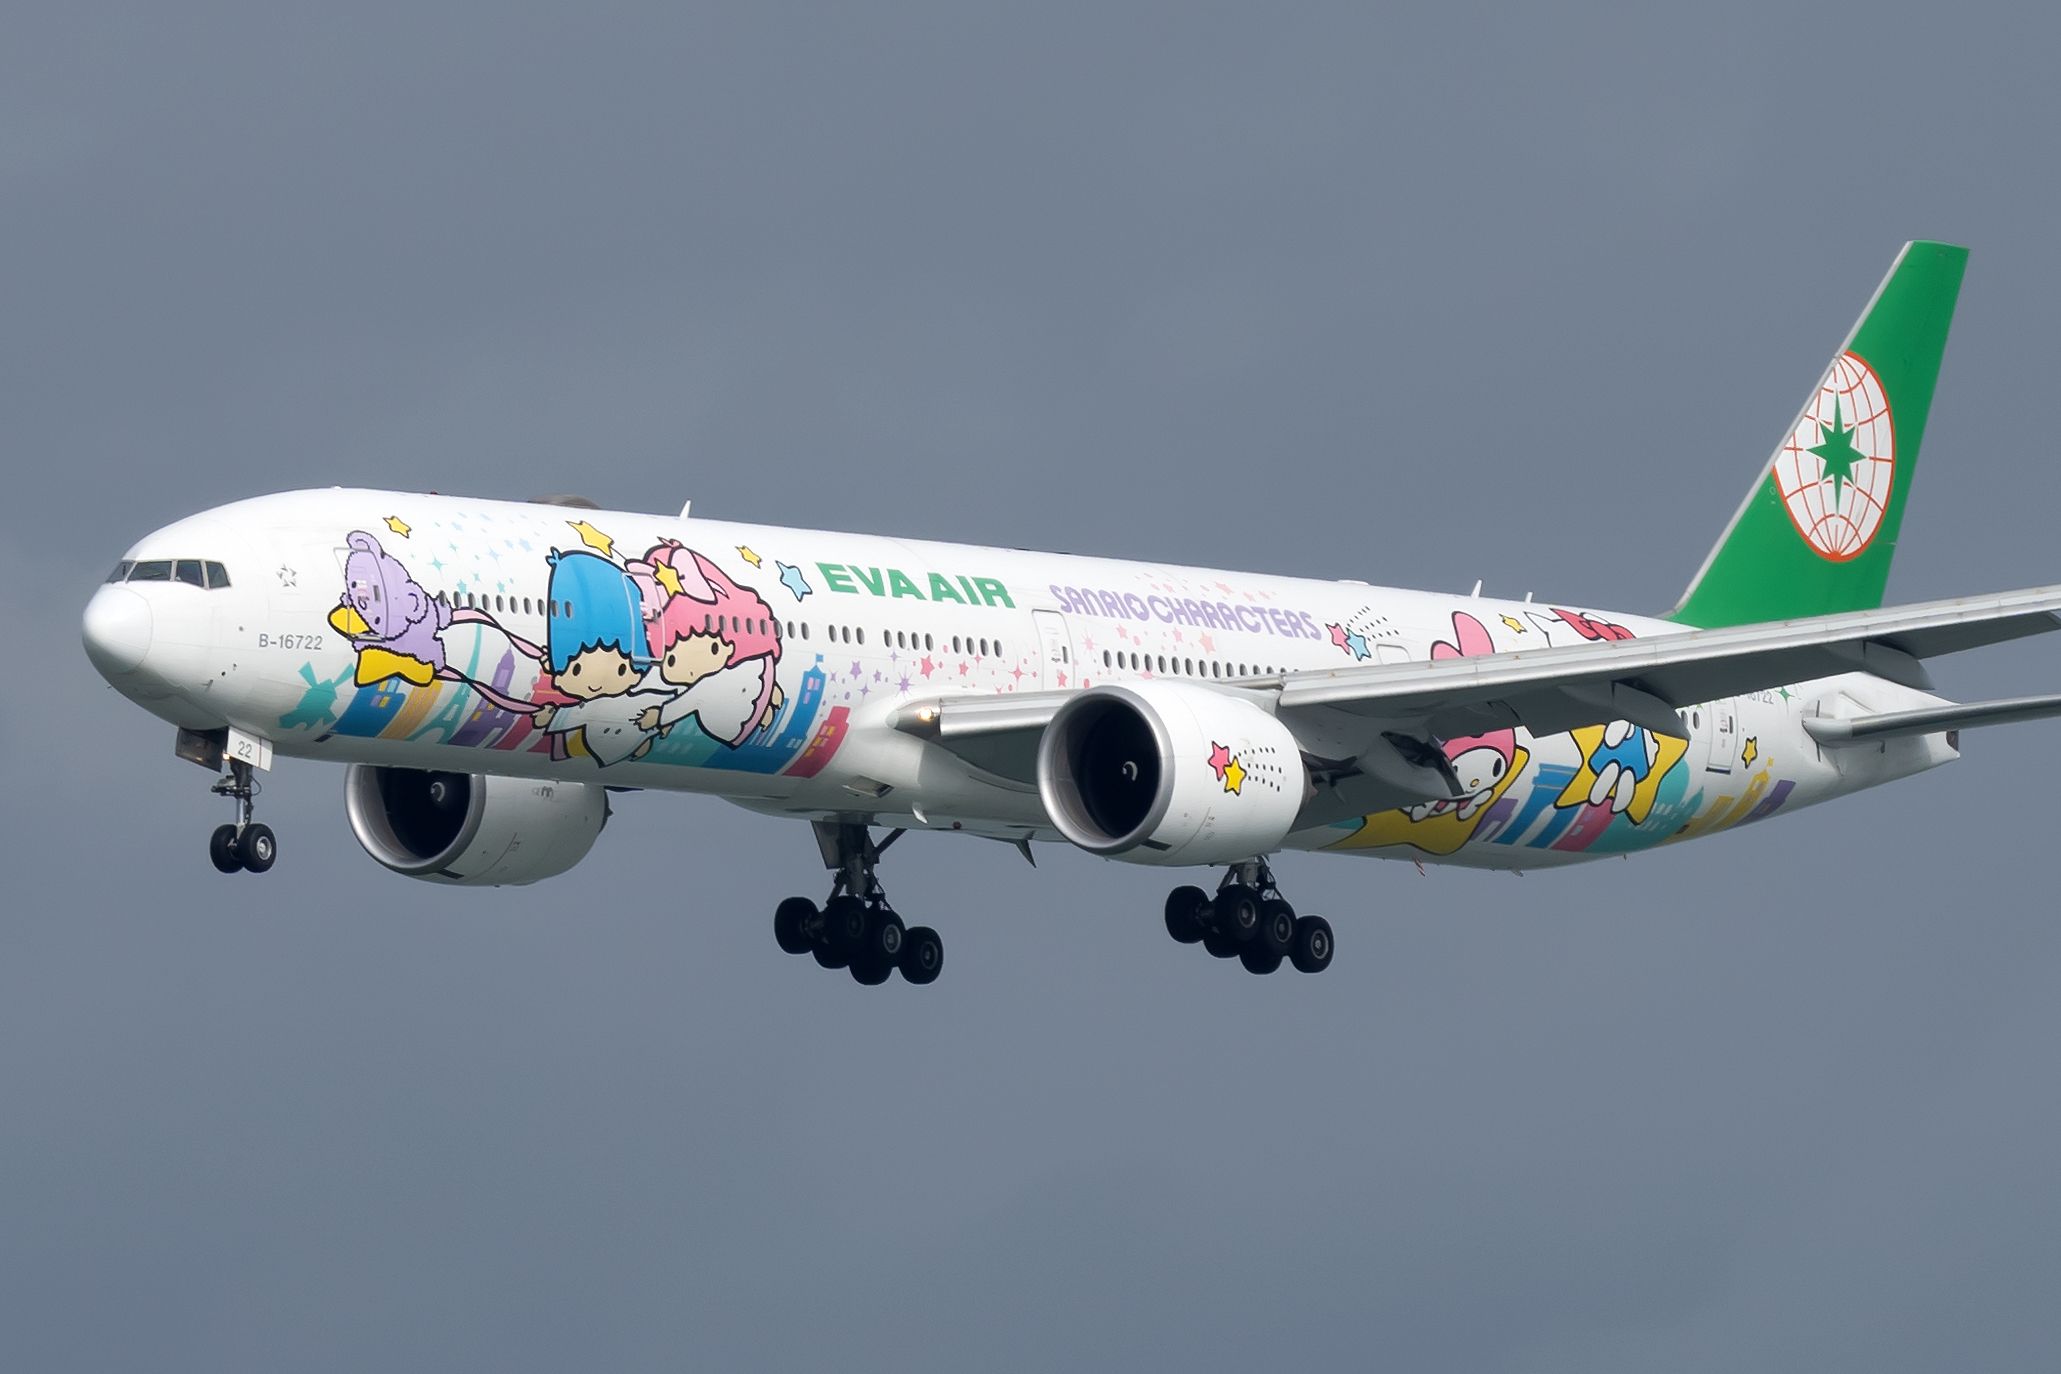 EVA Air (Hello Kitty - Shining Star Livery)Boeing 777-36N(ER) B-16722 (2)